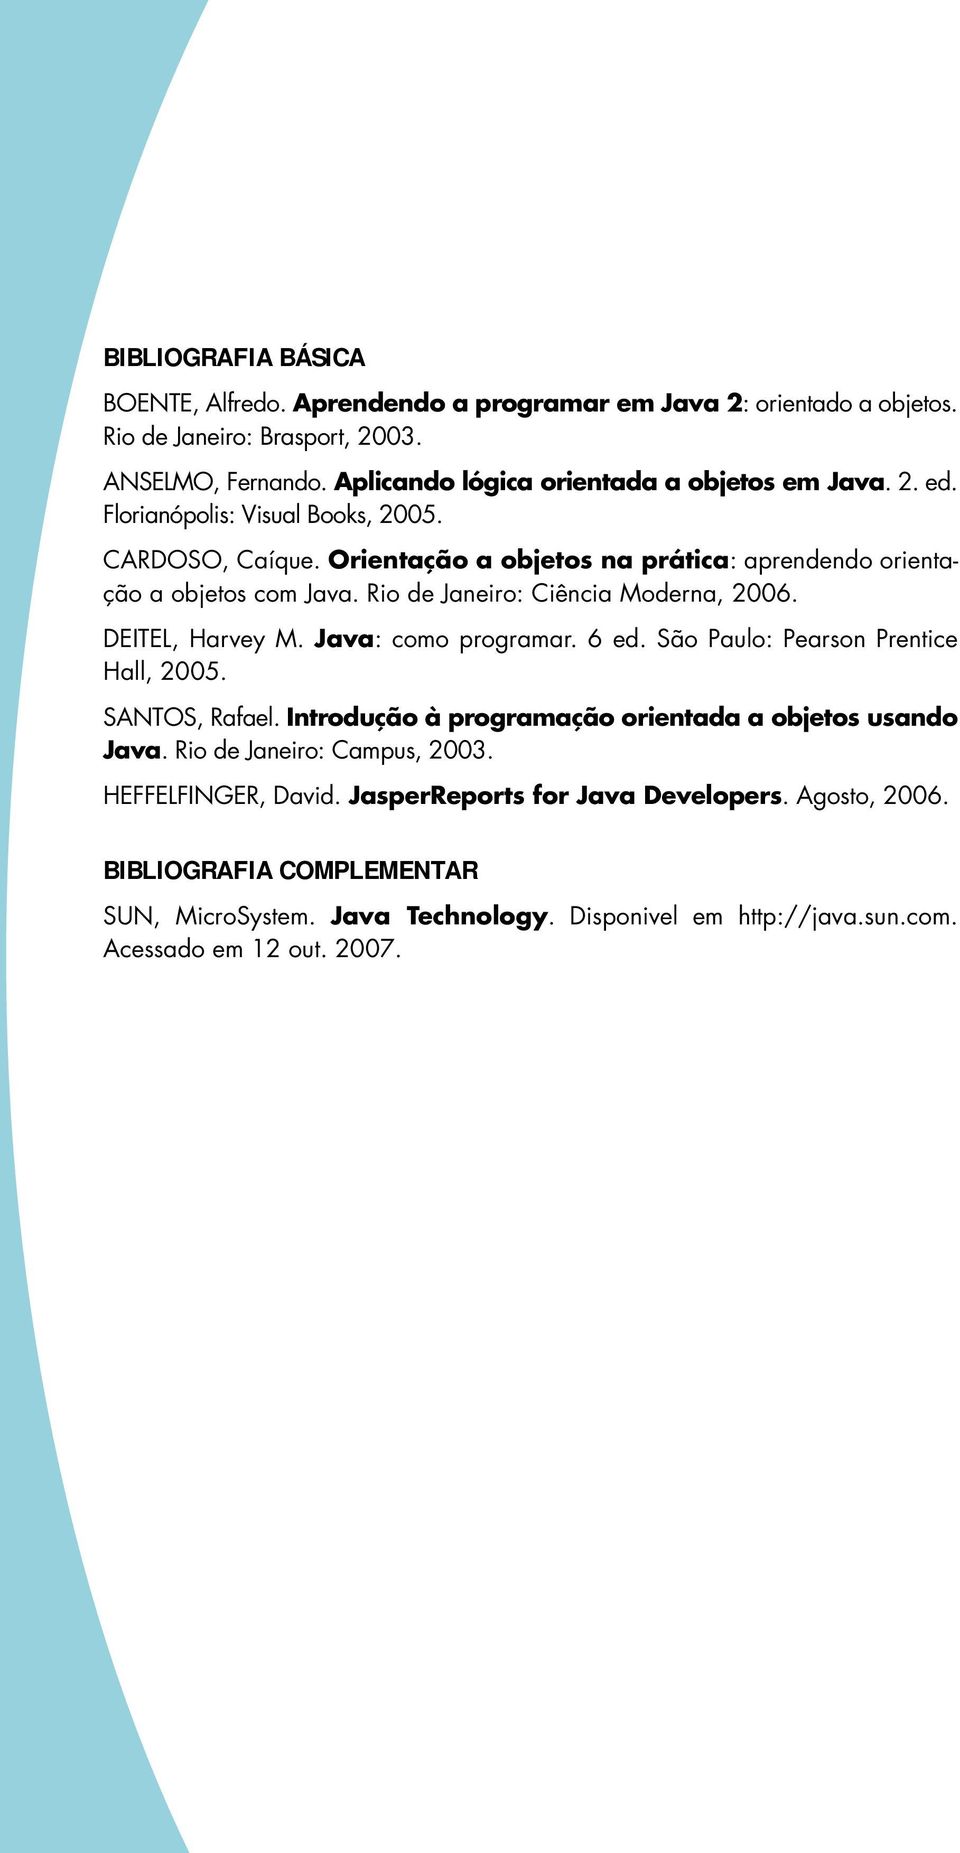 Rio de Janeiro: Ciência Moderna, 2006. DEITEL, Harvey M. Java: como programar. 6 ed. São Paulo: Pearson Prentice Hall, 2005. SANTOS, Rafael.